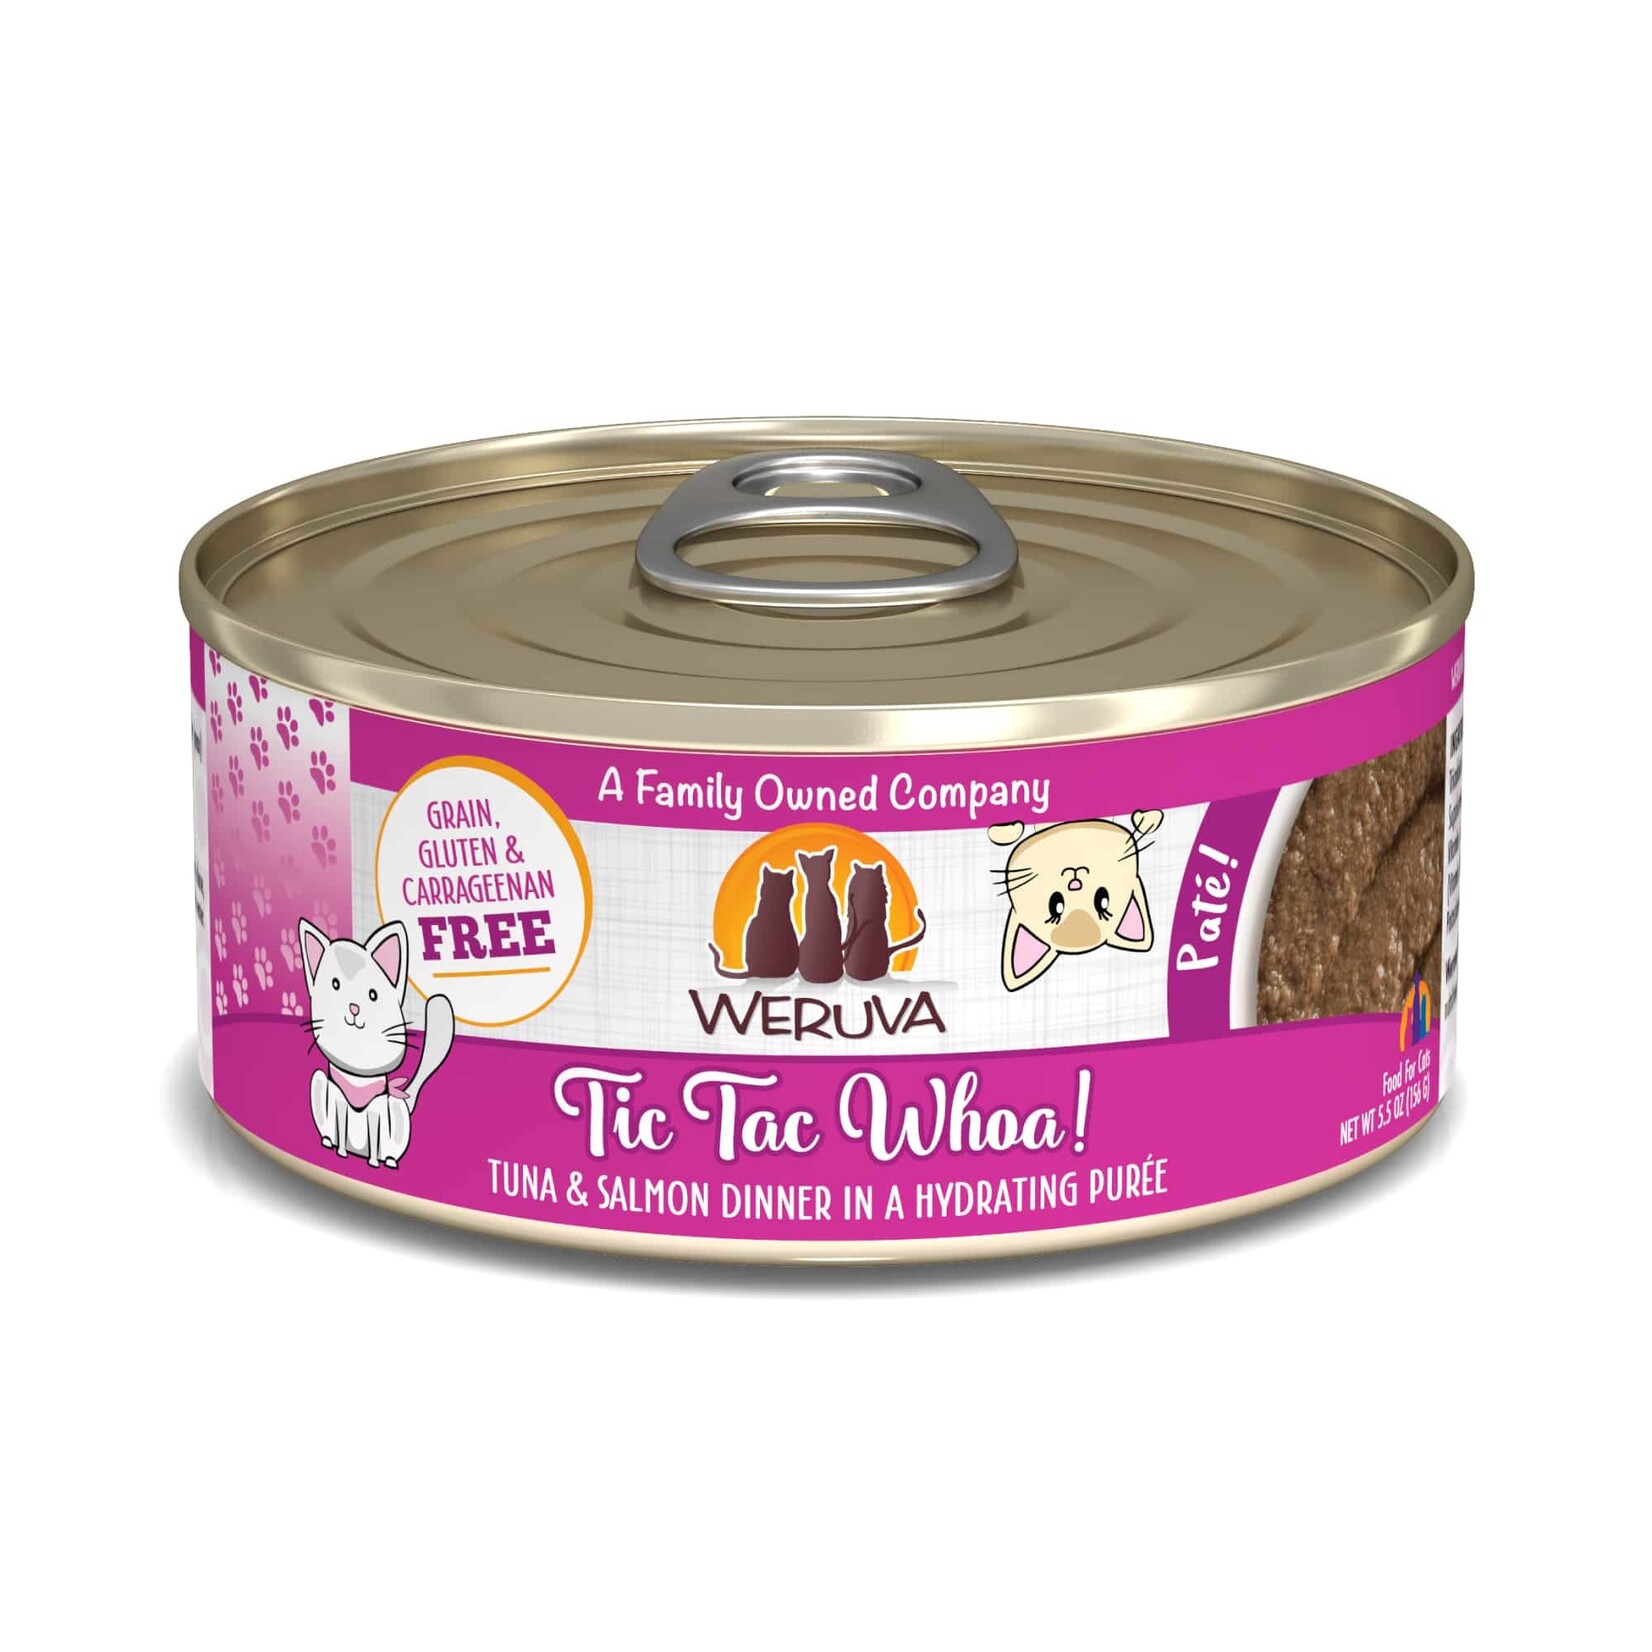 Weruva Tic Tac Whoa Tuna & Salmon Dinner in a Hydrating Purée Wet Cat Food